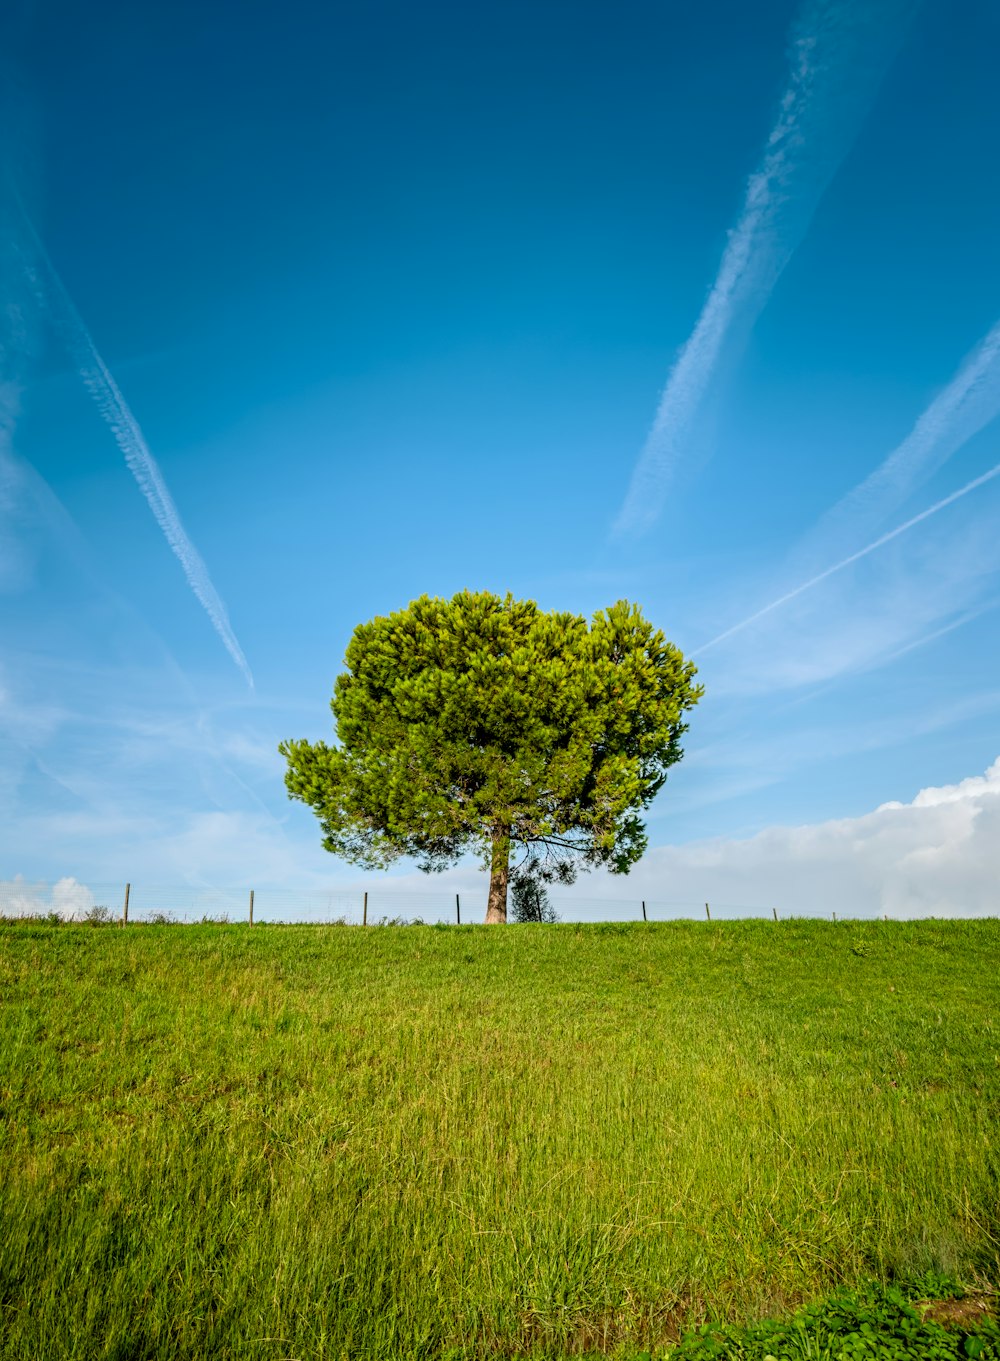 a lone tree in a grassy field under a blue sky